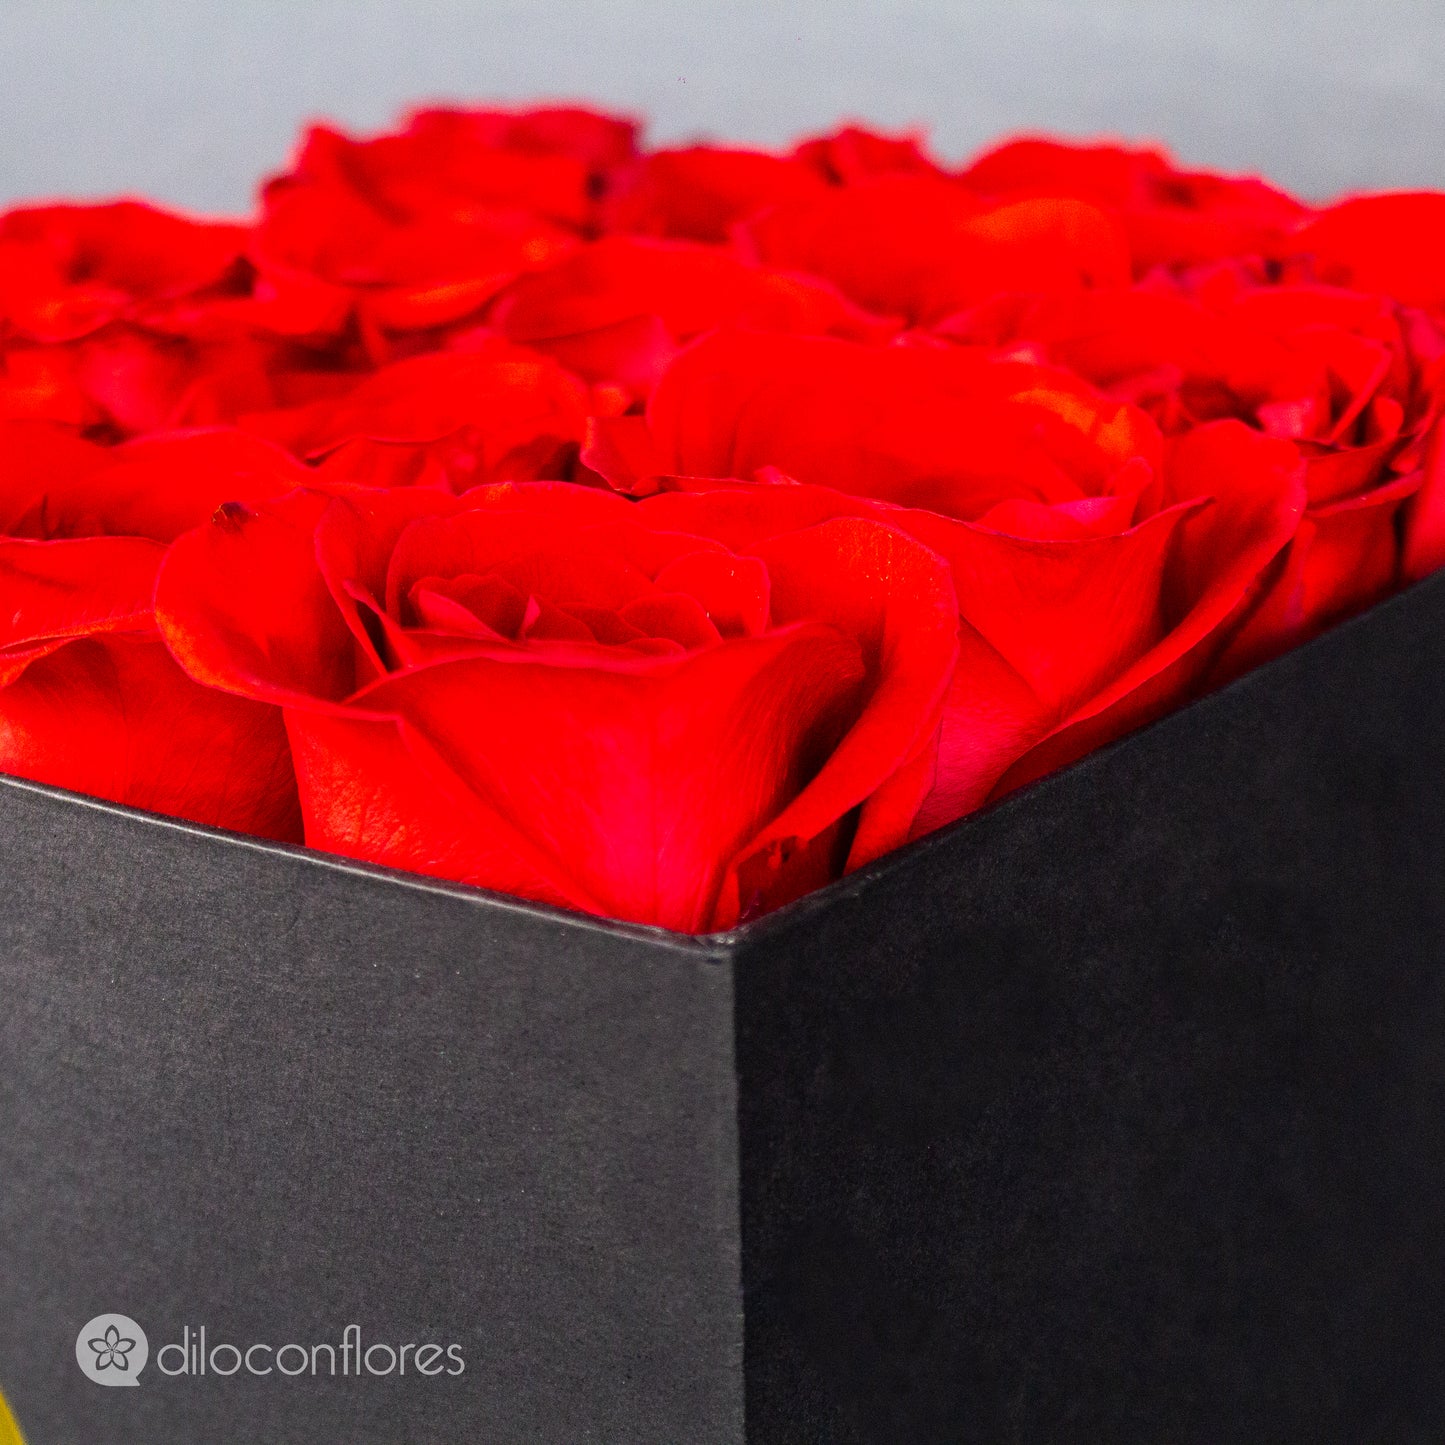 Caja de rosas rojas